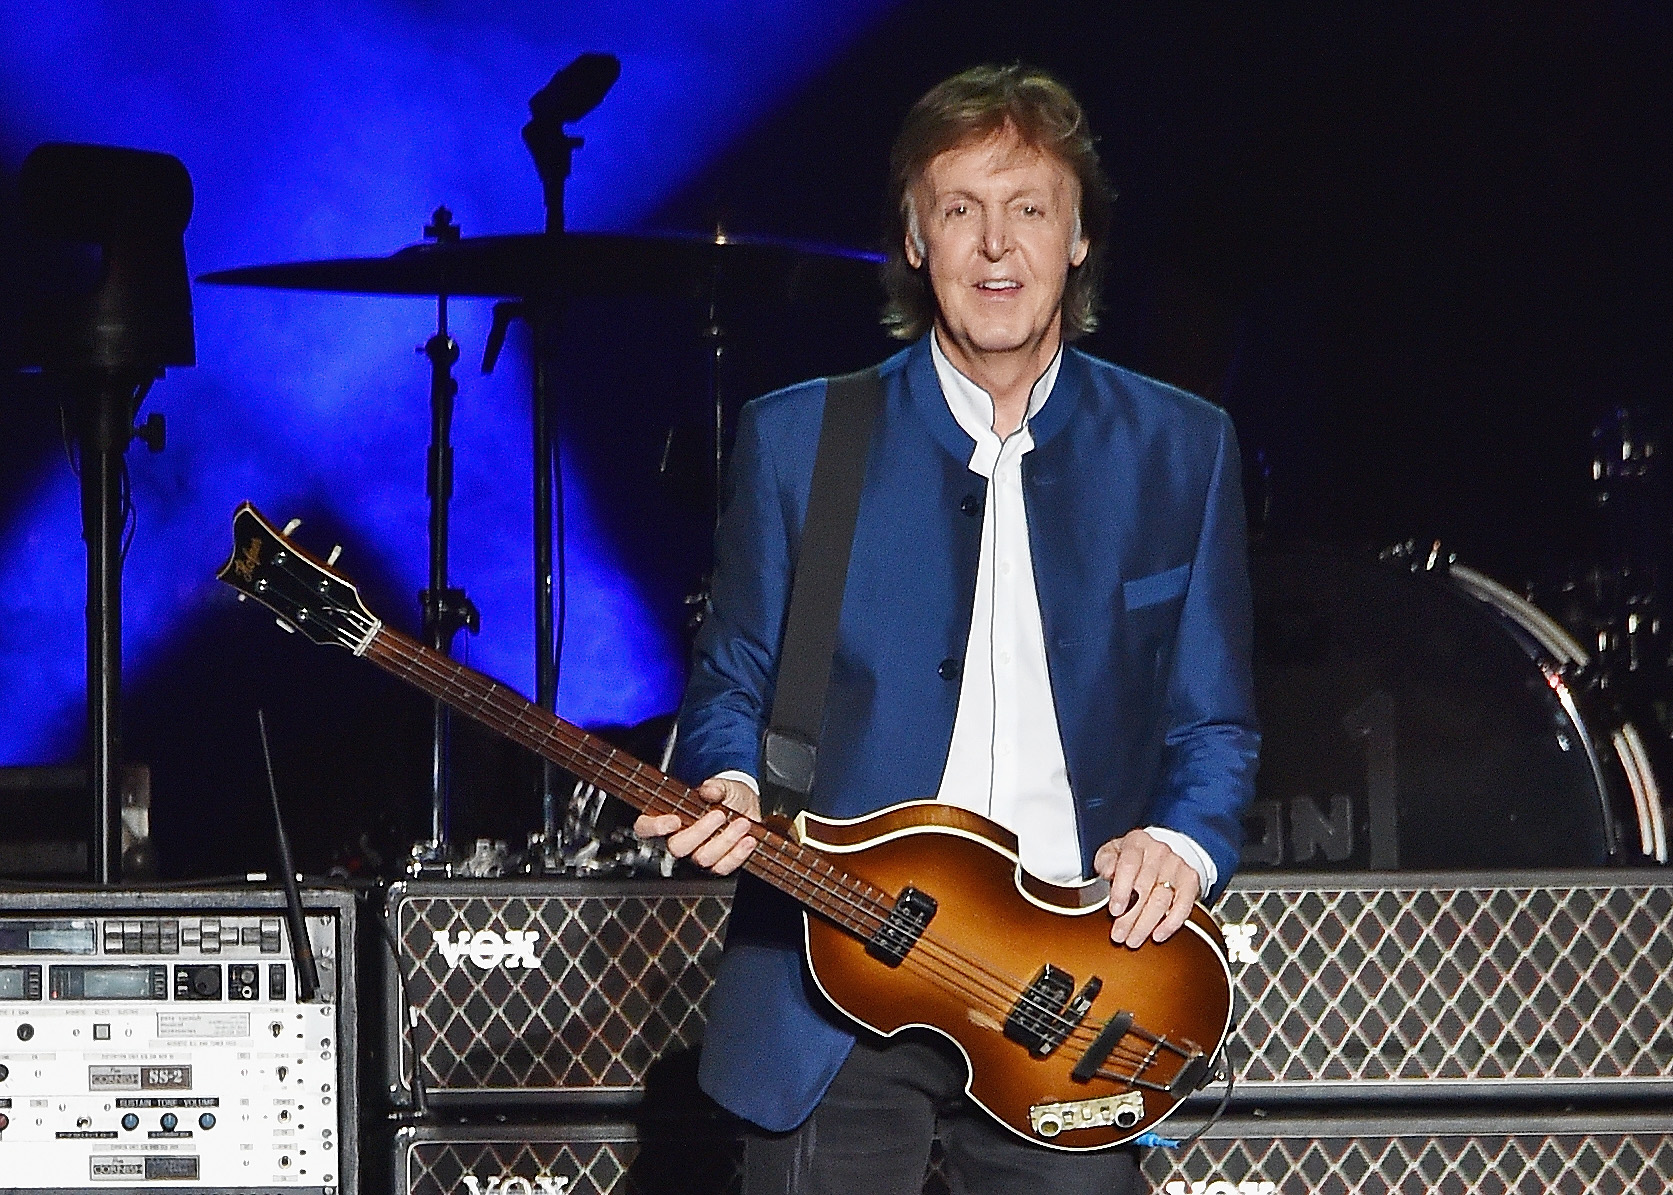 Paul McCartney with his guitar